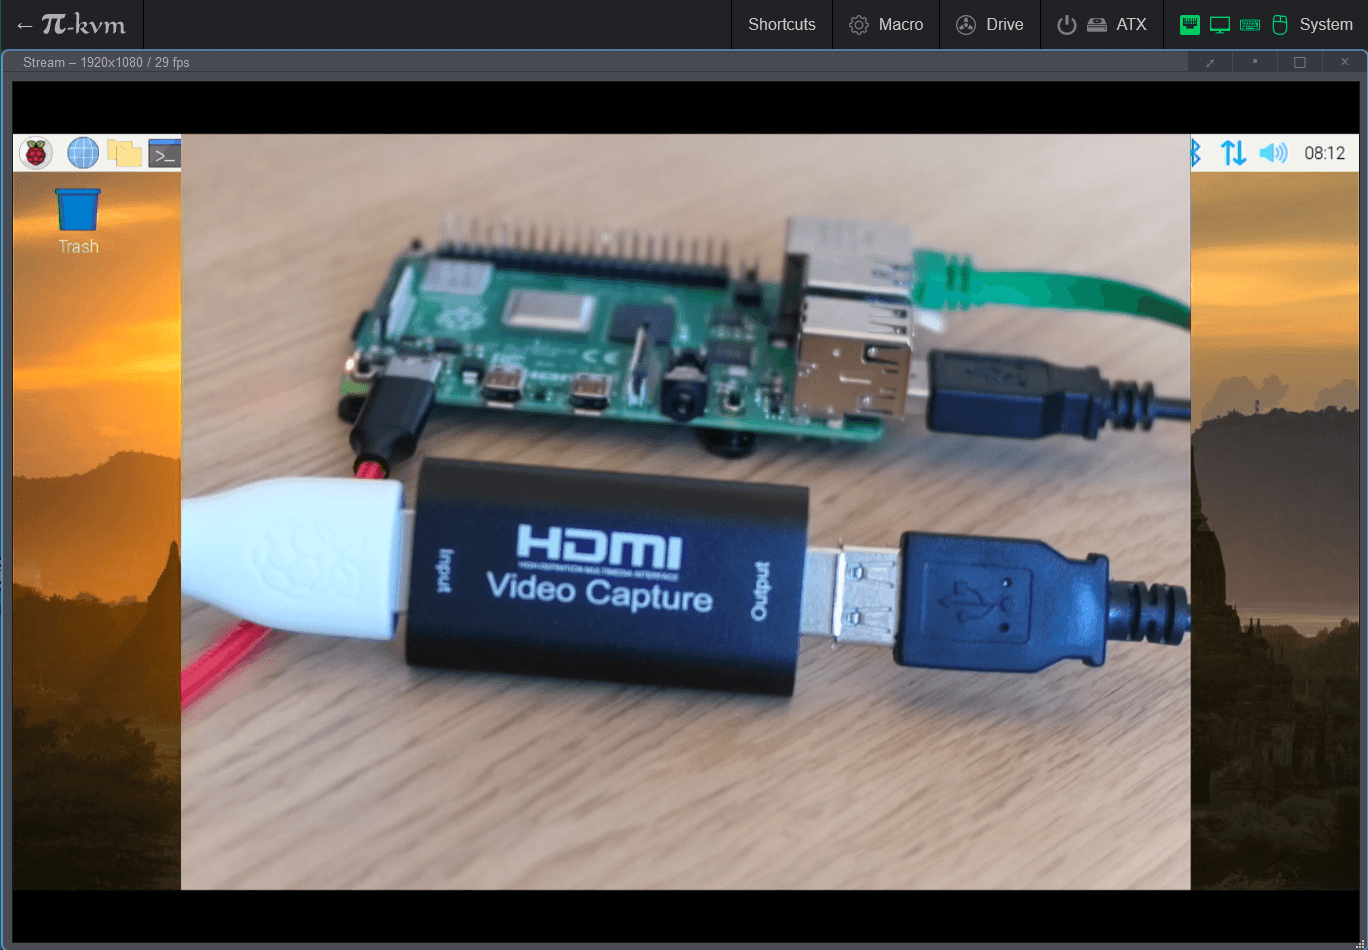 Raspberry Pi as a KVM Remote Control